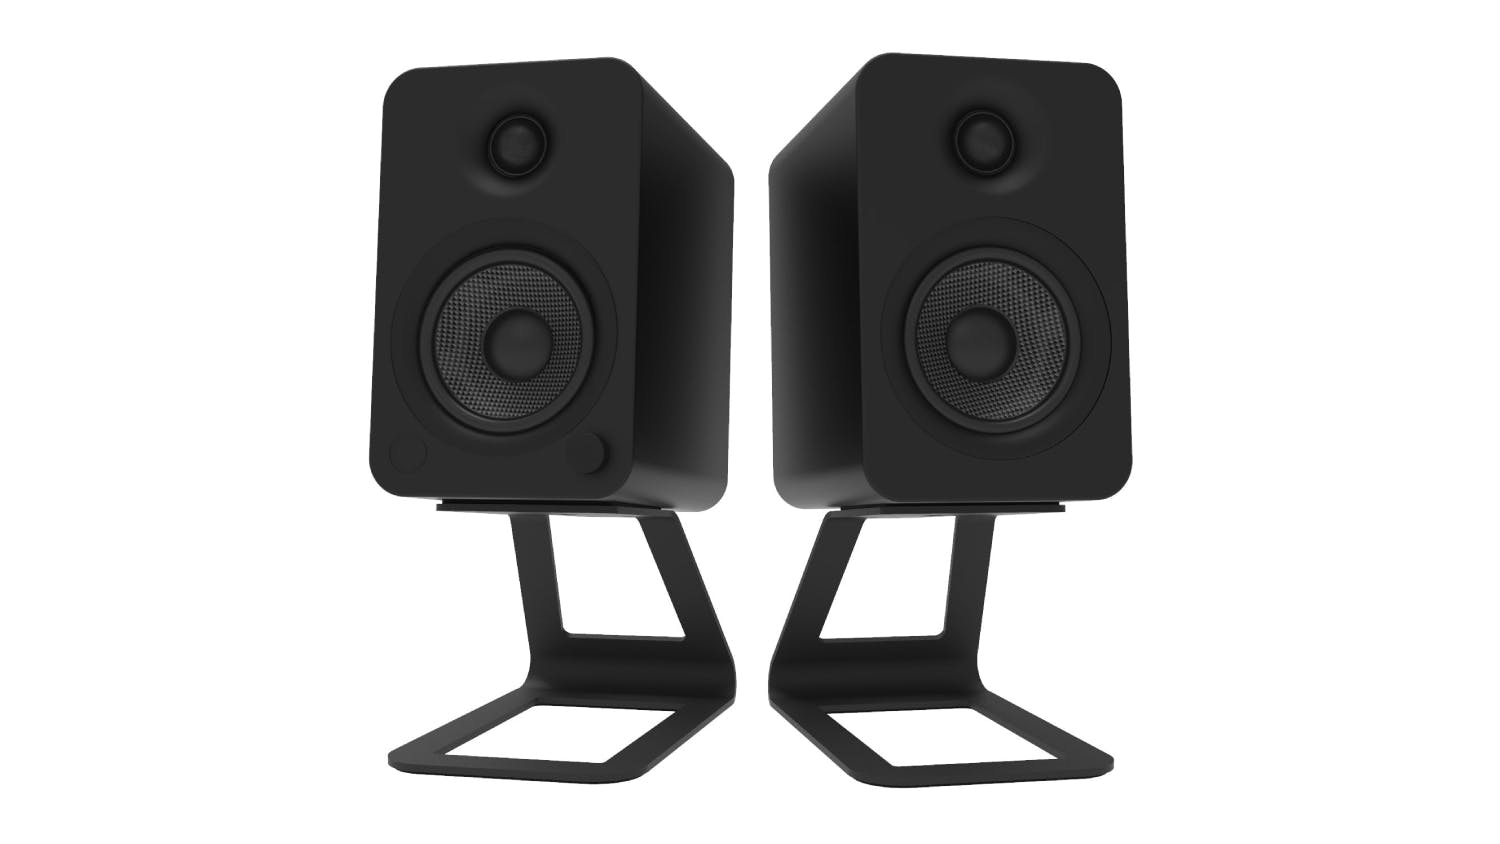 Kanto SE4 Raised Speaker Stands for Desktop - Black